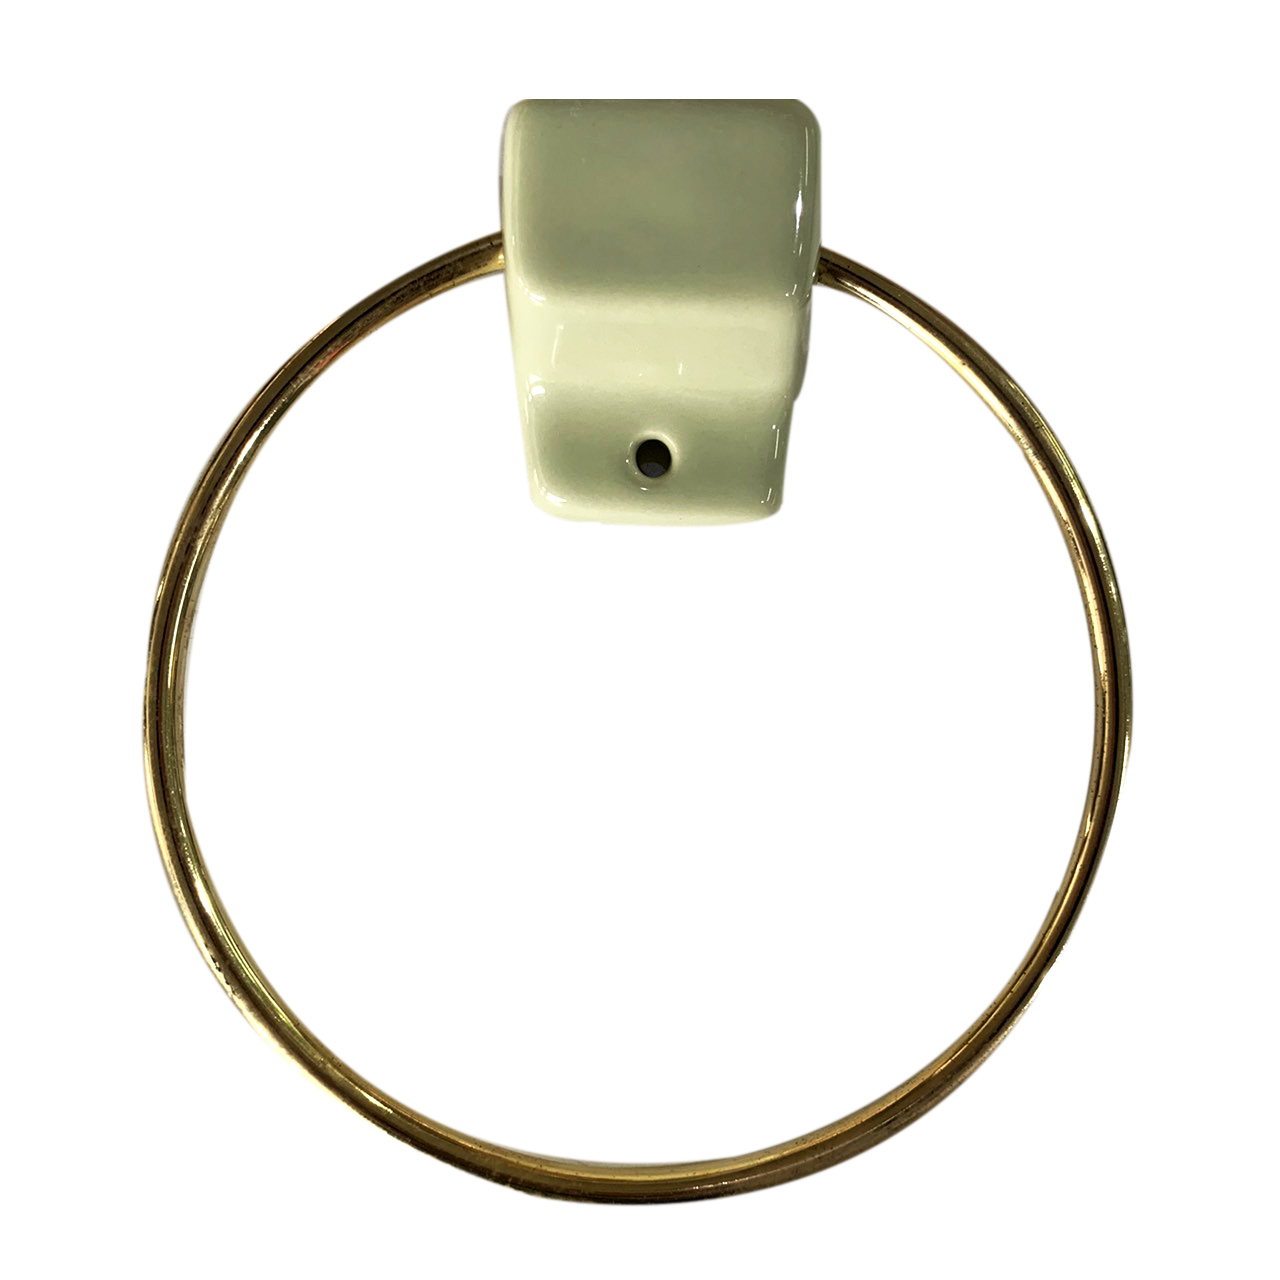 C808 ห่วงแขวนผ้า ห่วงทอง+หัวสีเขียวก้านตอง (GOLD RING) รุ่น STANDARD - COTTO